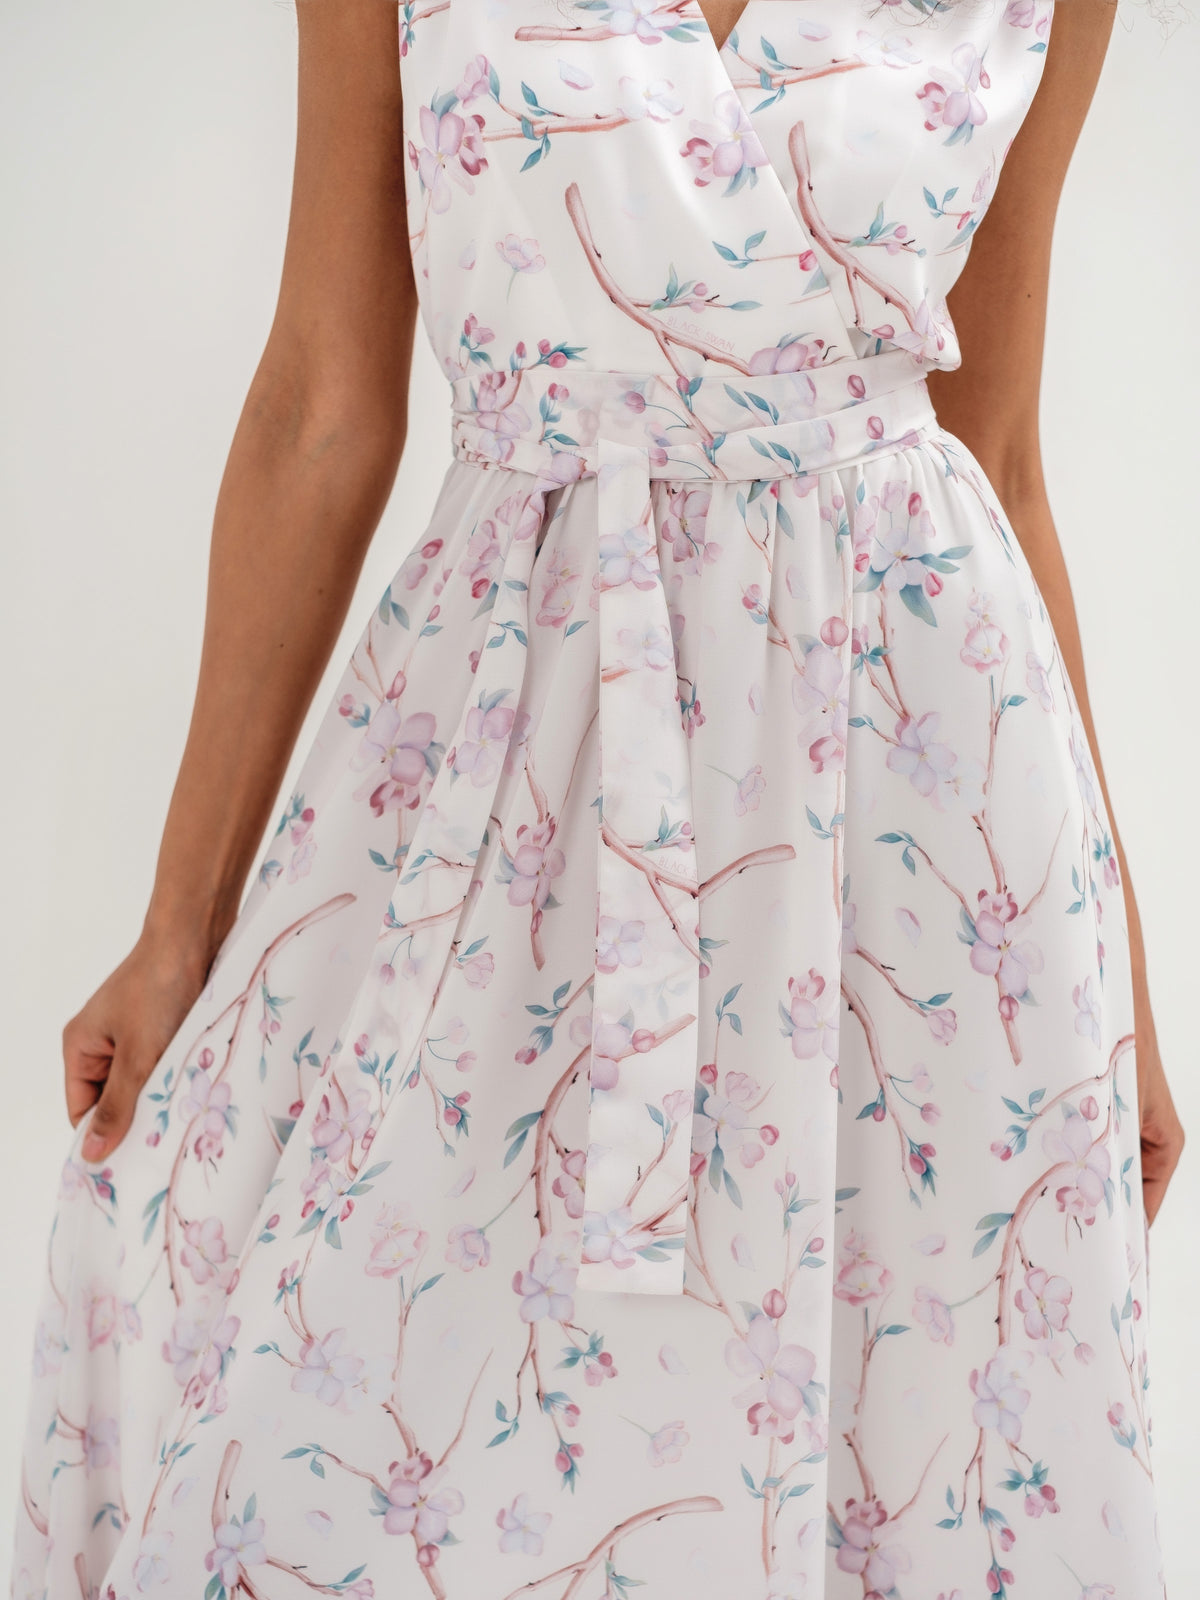 Light apple blossoms print dress V neckline with lining